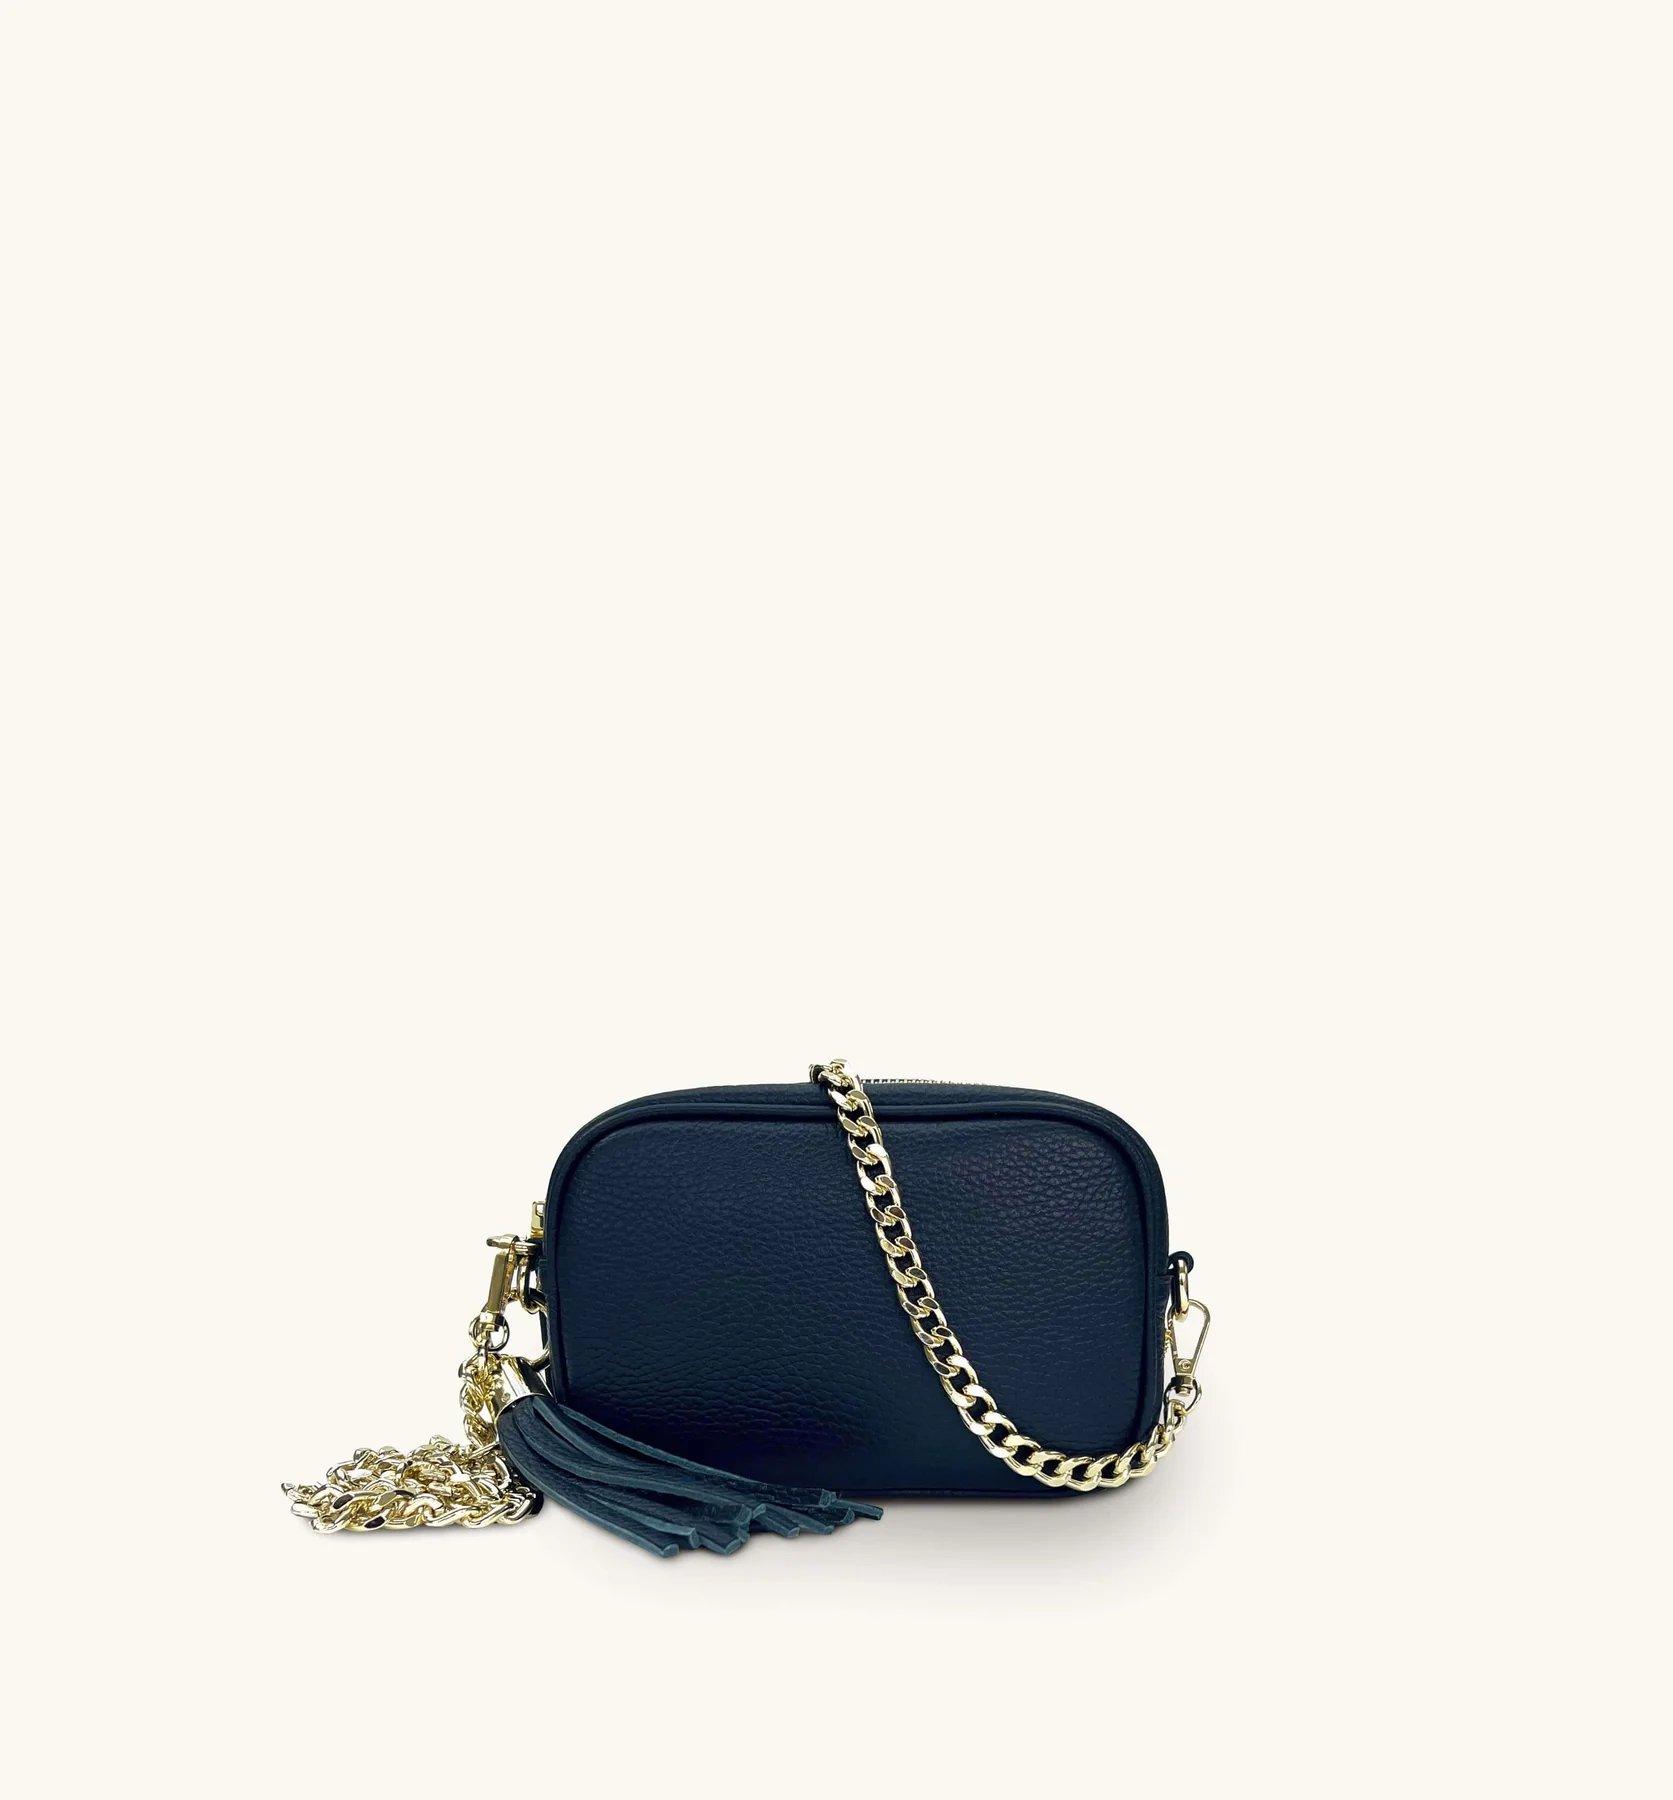 Темно-синяя кожаная сумка для телефона Mini с кисточками и золотым ремешком через плечо с цепочкой Apatchy London, темно-синий компактная сумка dji черно желтая для mini mini 2